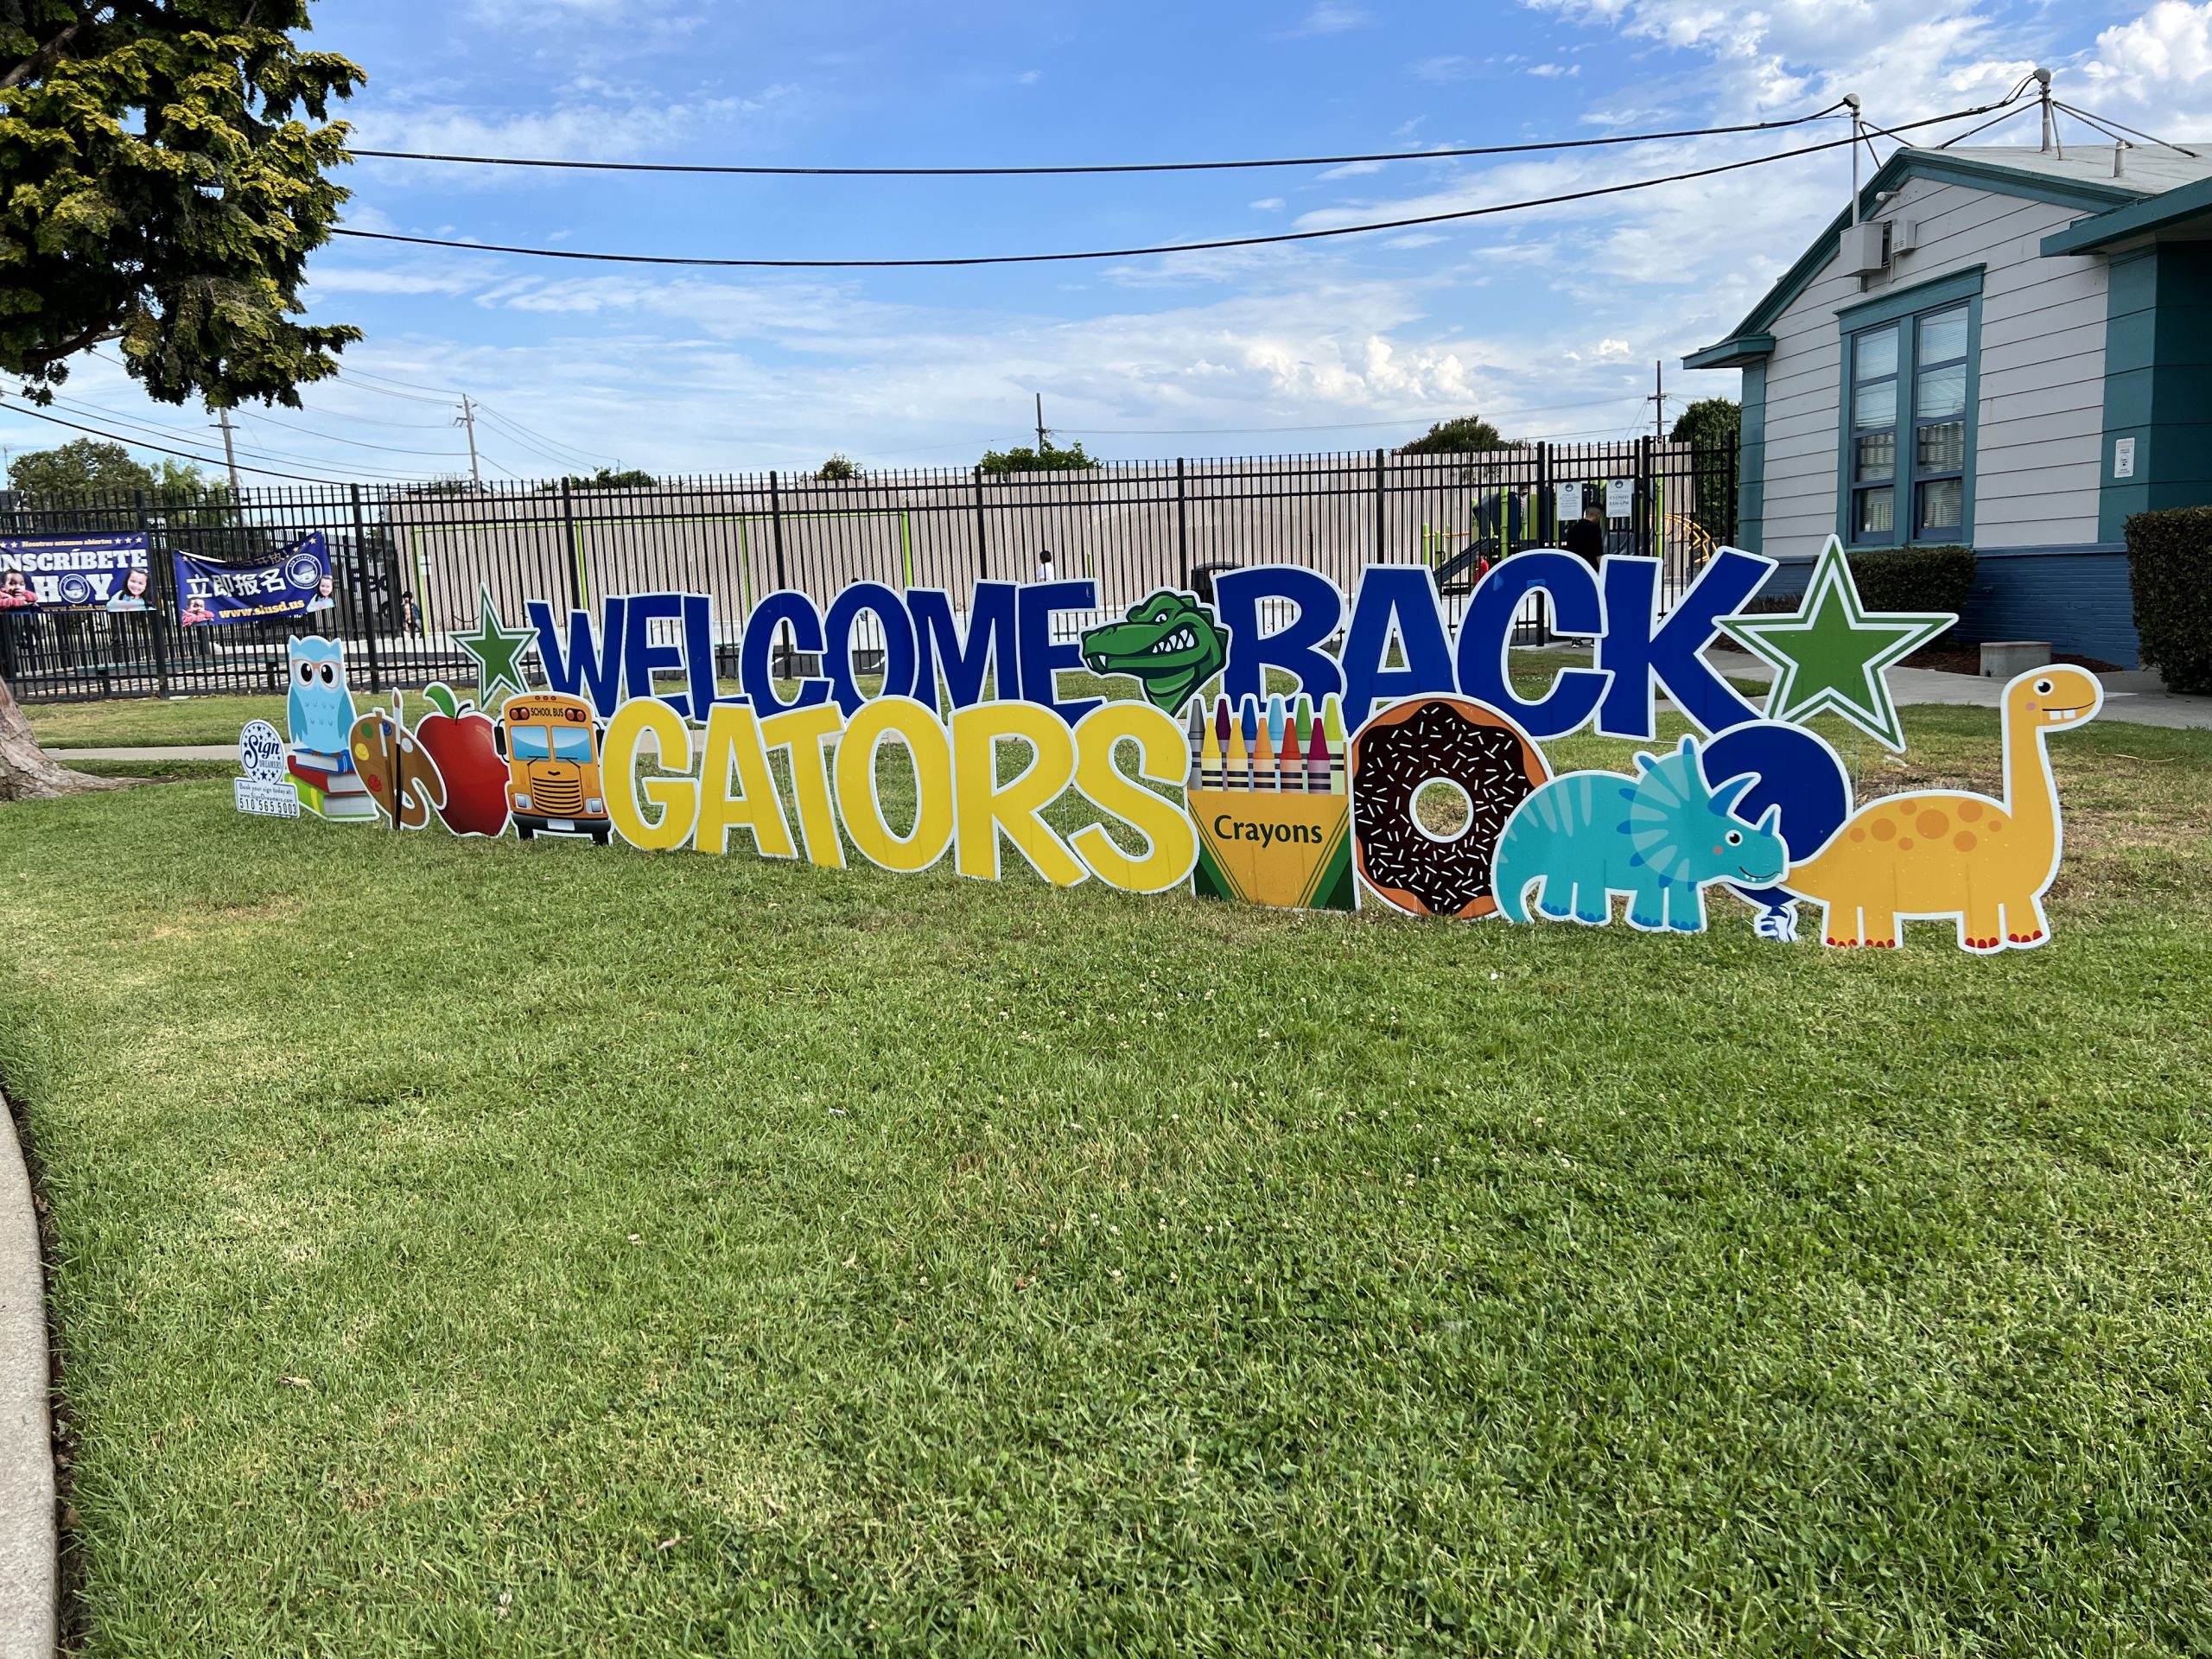 welcome-to-gatorville-garfield-elementary